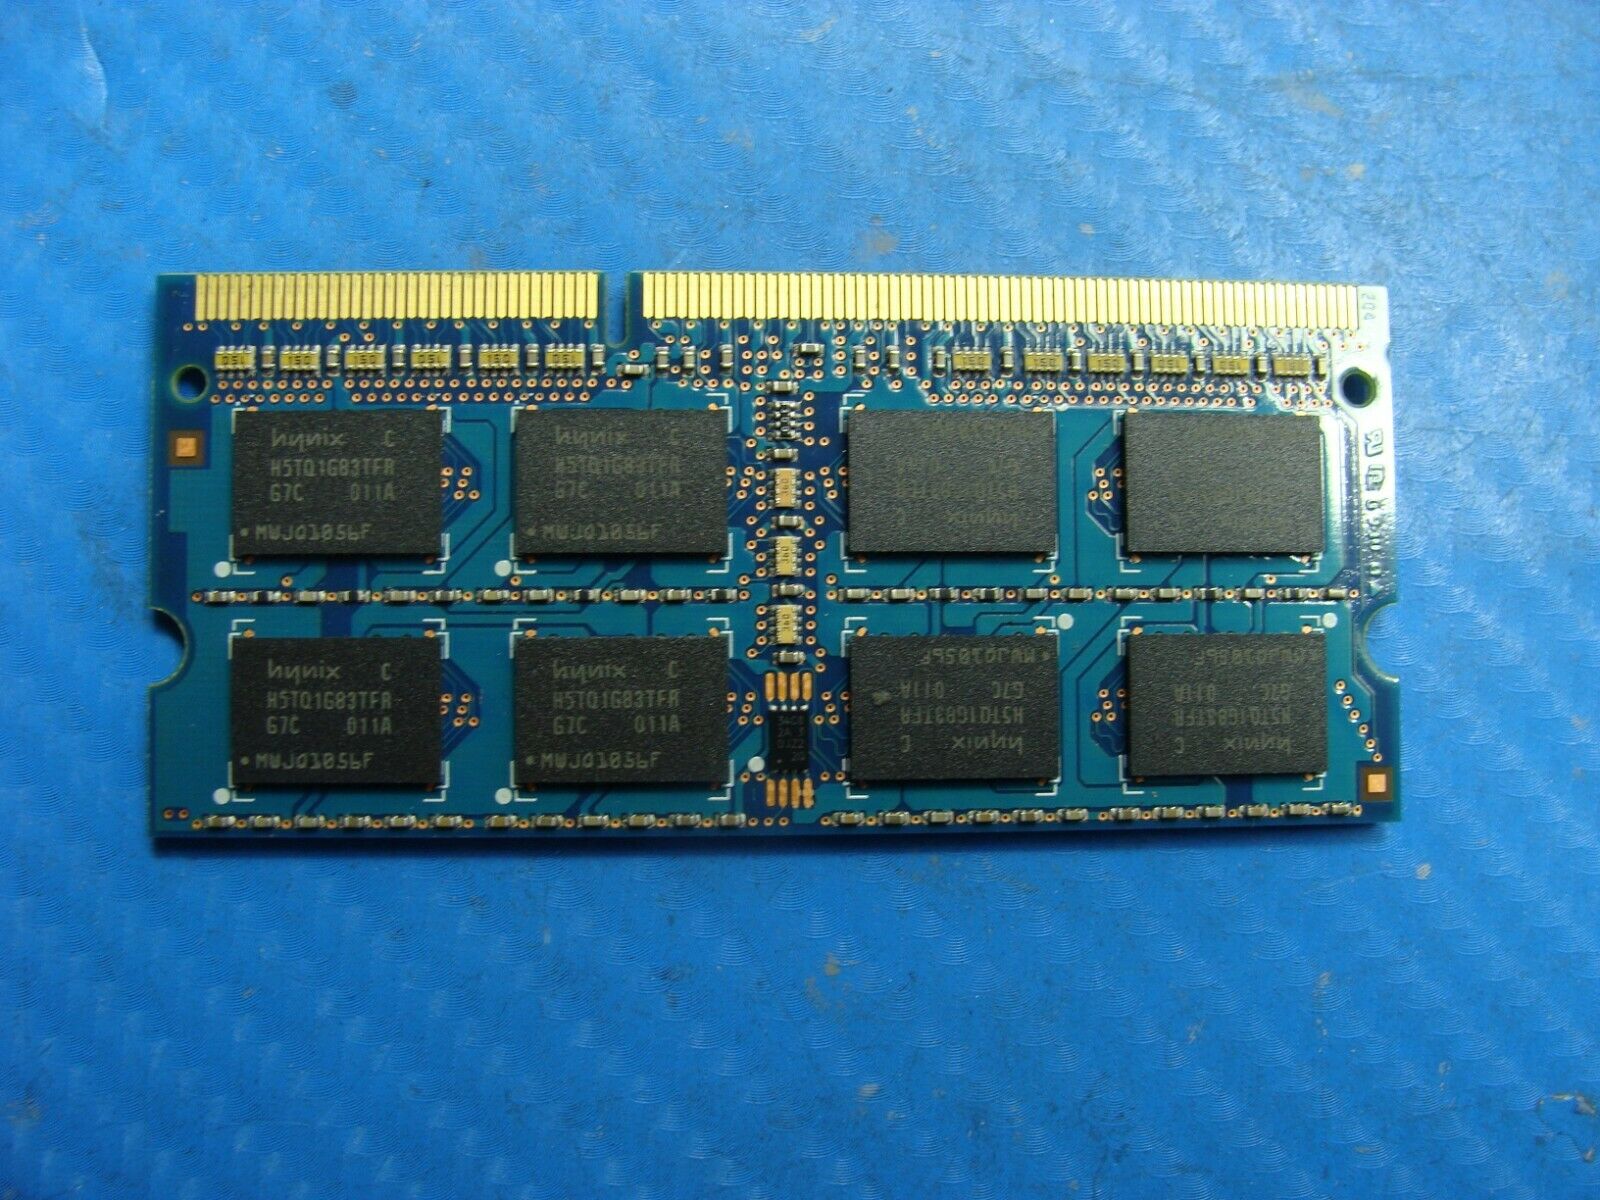 Apple A1278 Hynix 2GB 2Rx8 PC3-8500S SO-DIMM Memory RAM HMT125S6TFR8C-G7 Hynix